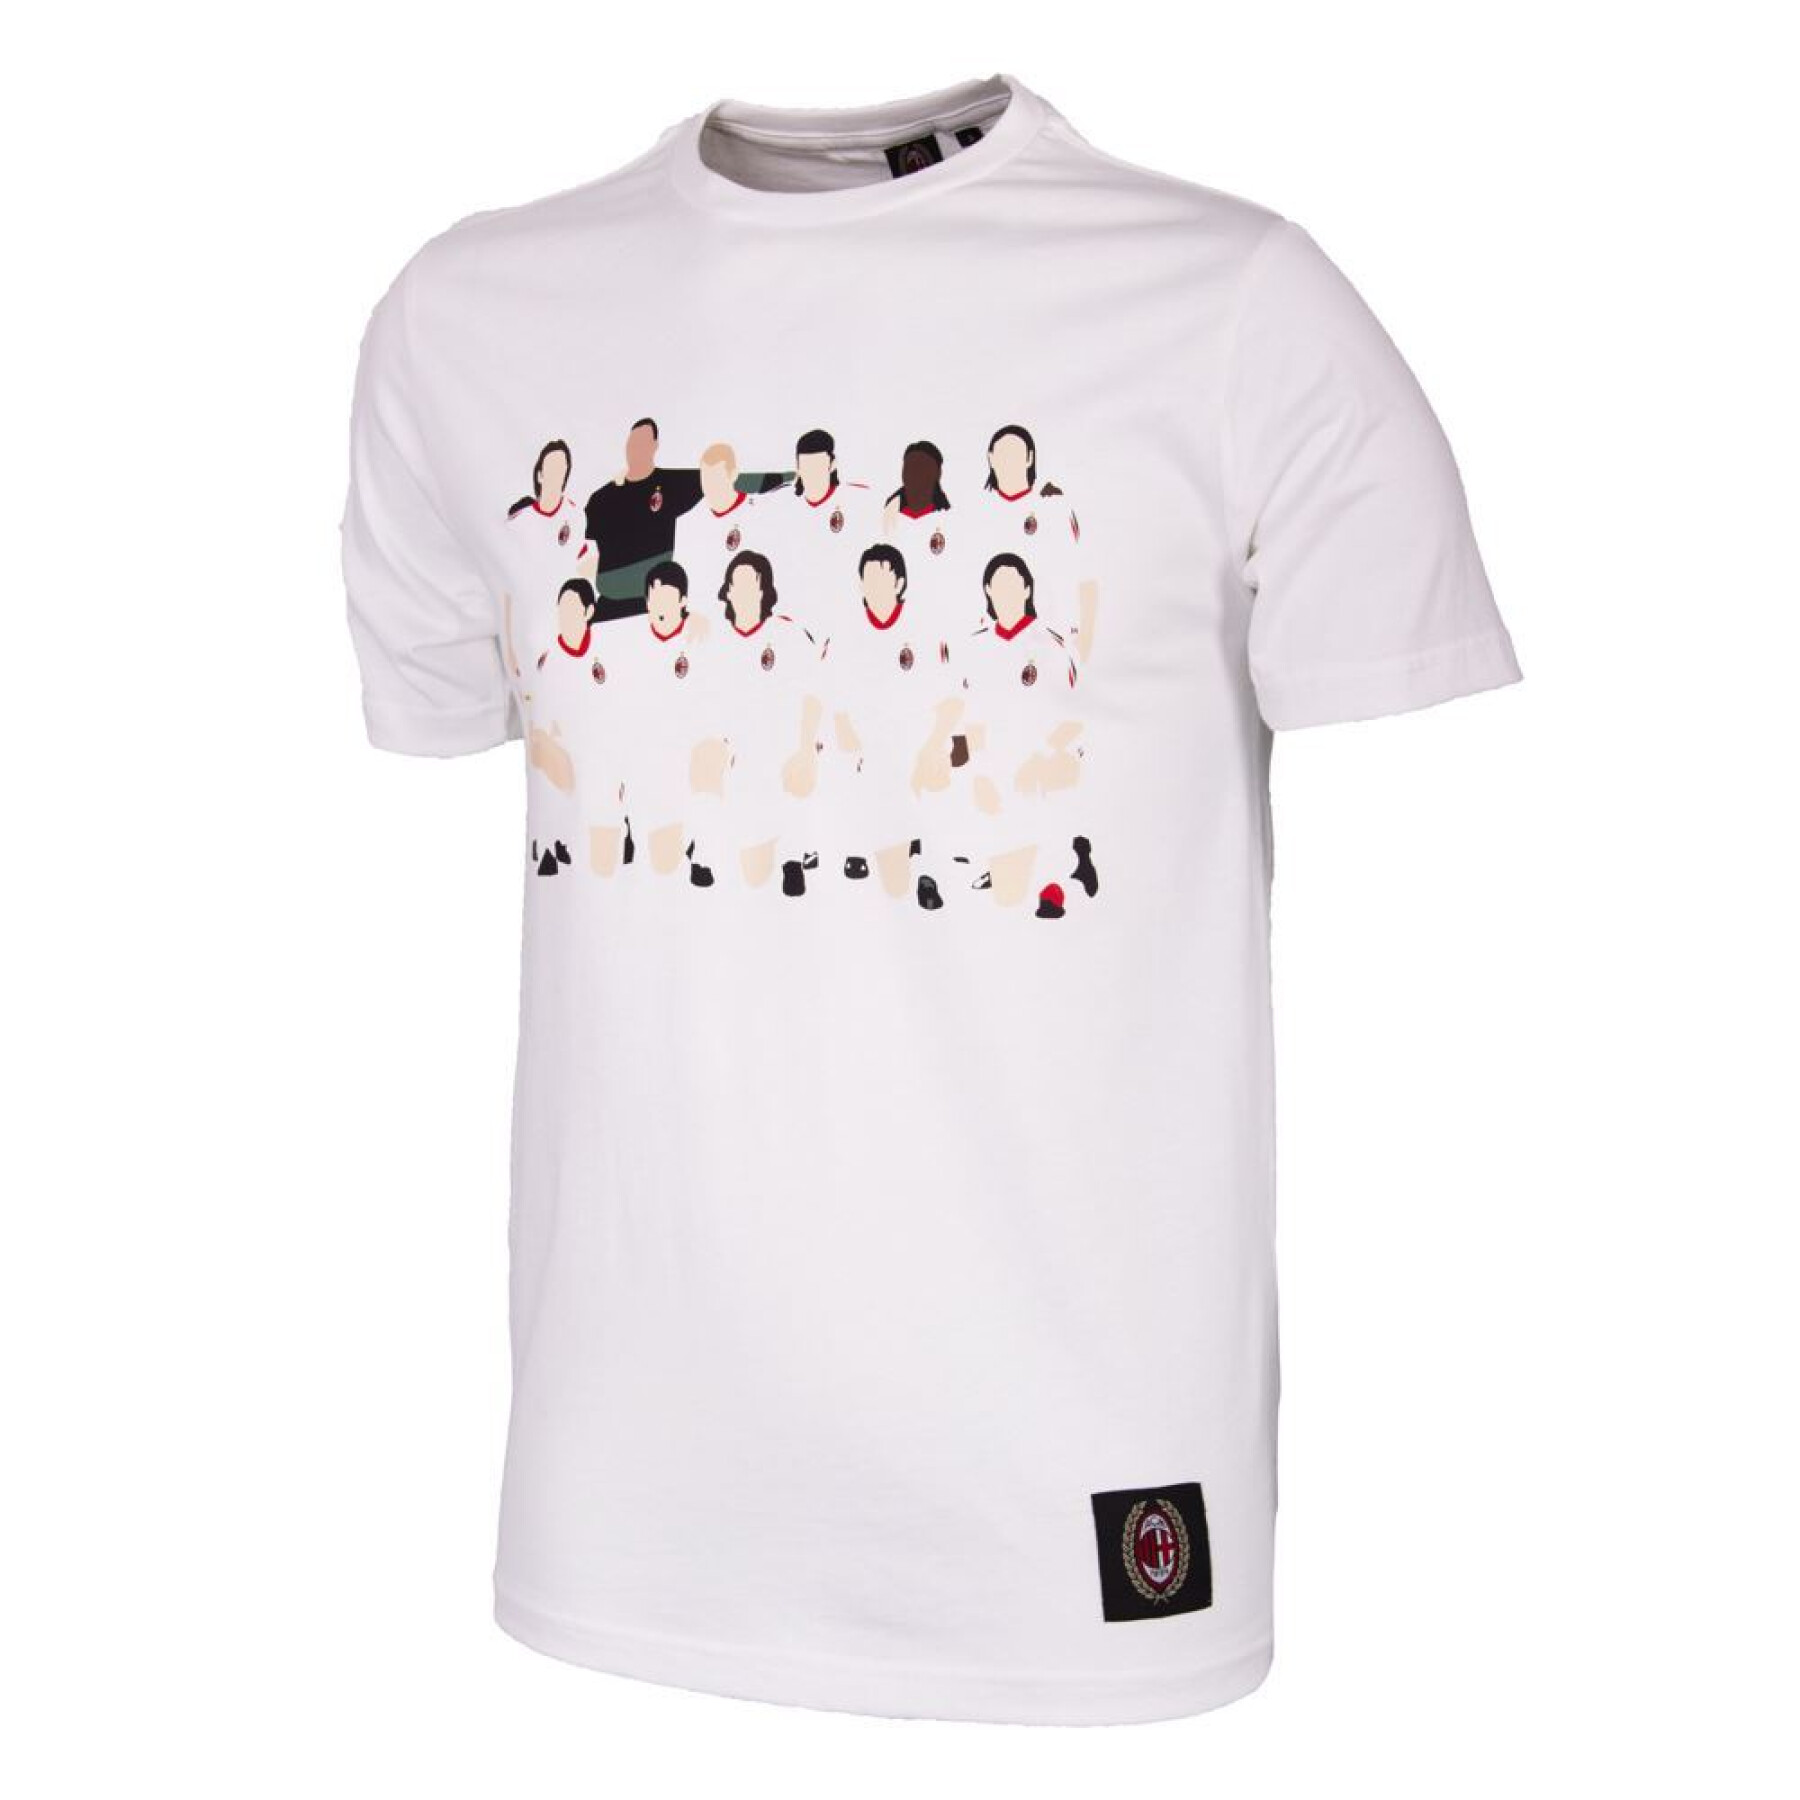 T-Shirt des Teams Milan AC CL 2003/04